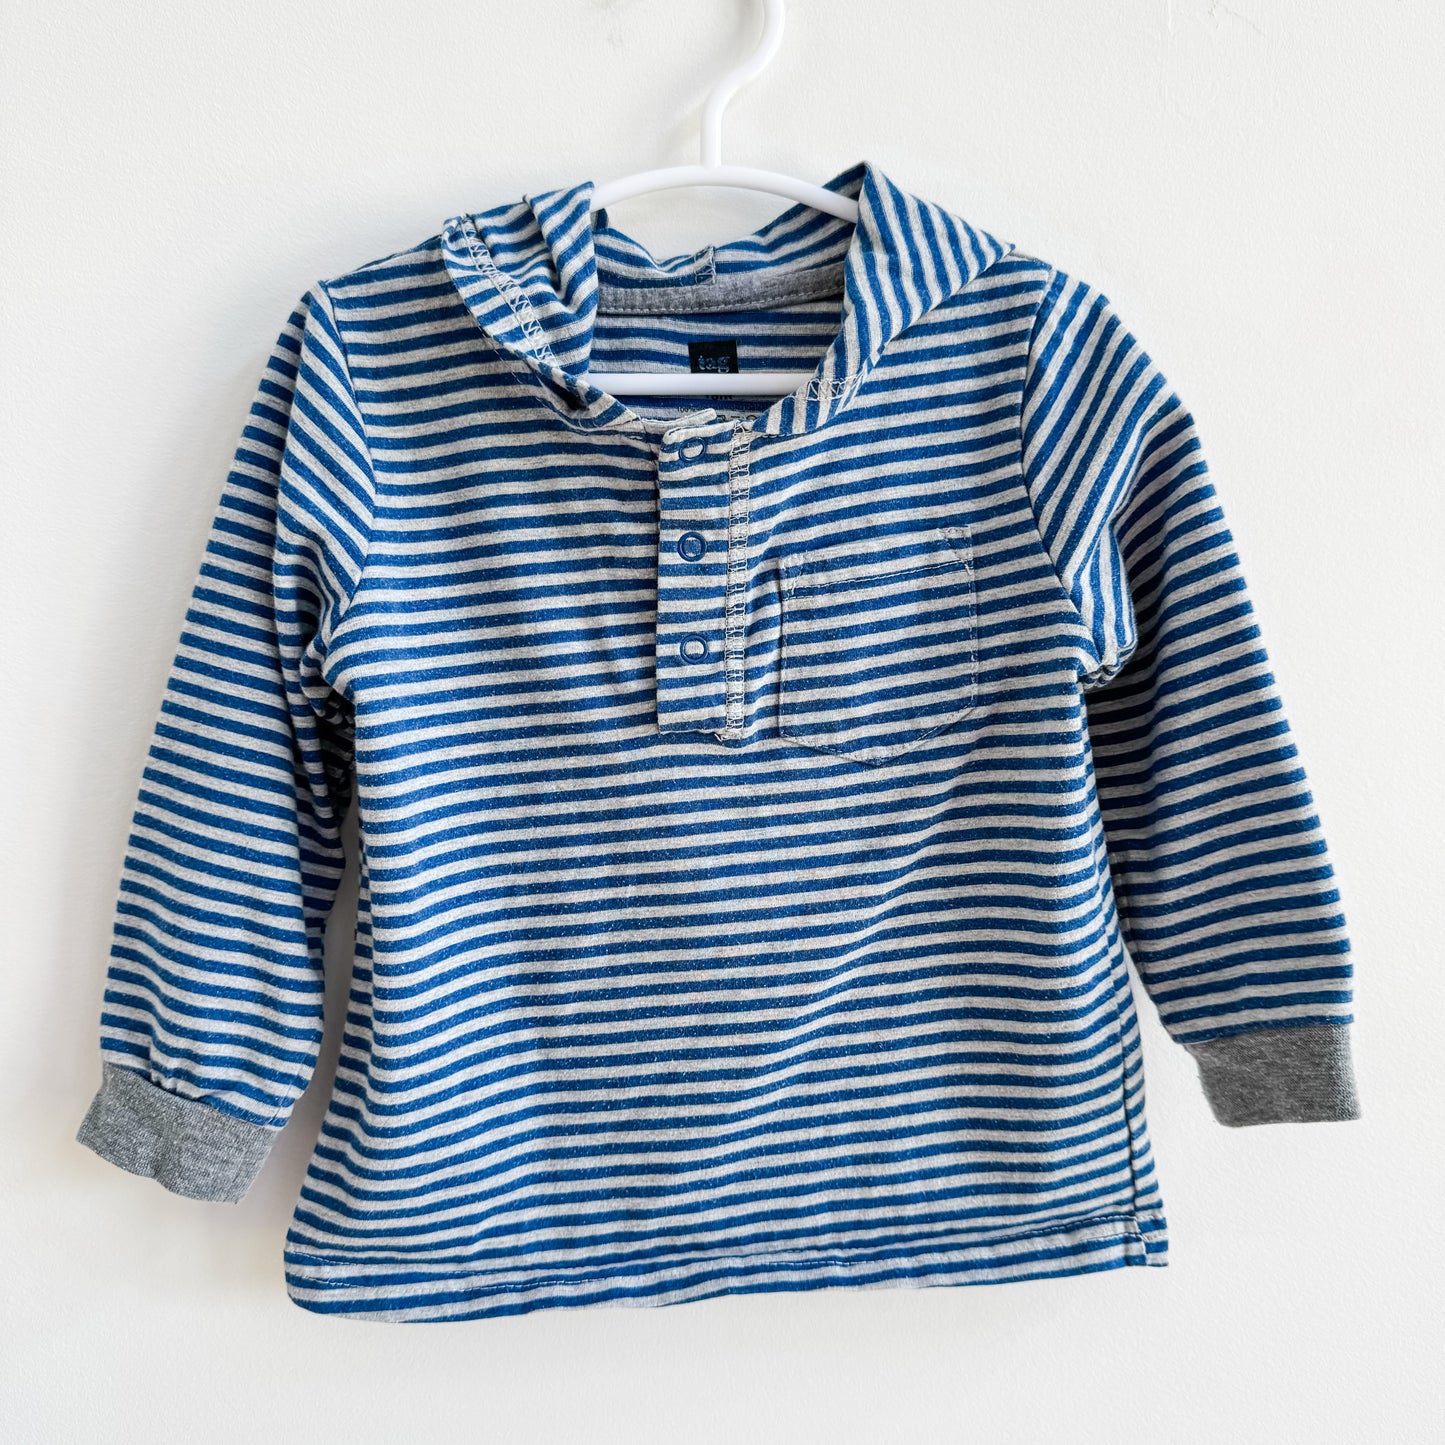 TAG Stripe Sweater (18m)